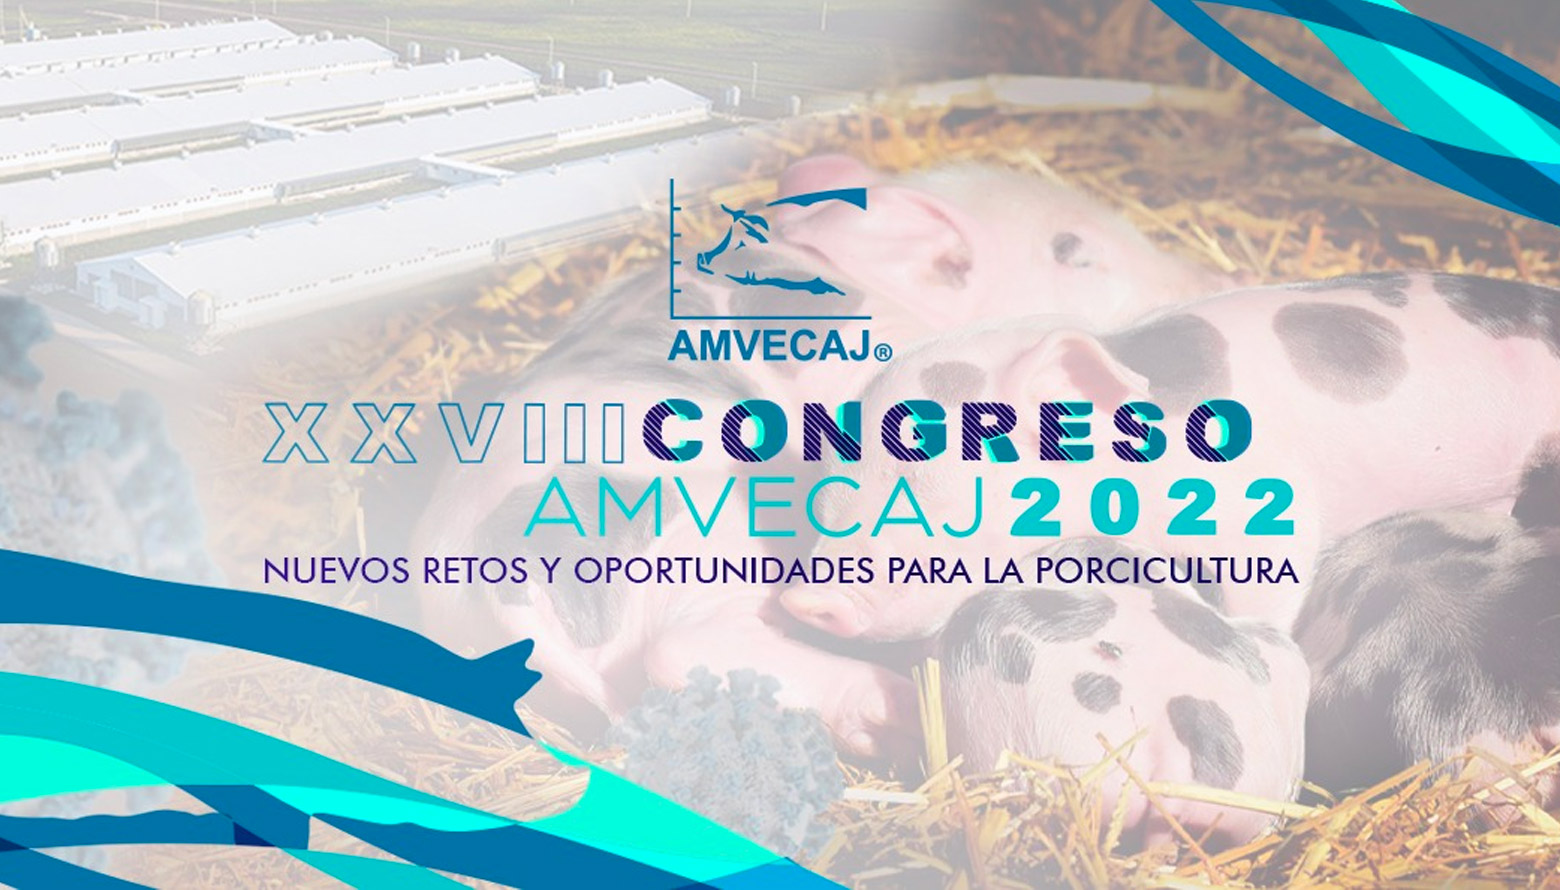 XXVIII Congreso AMVECAJ 2022